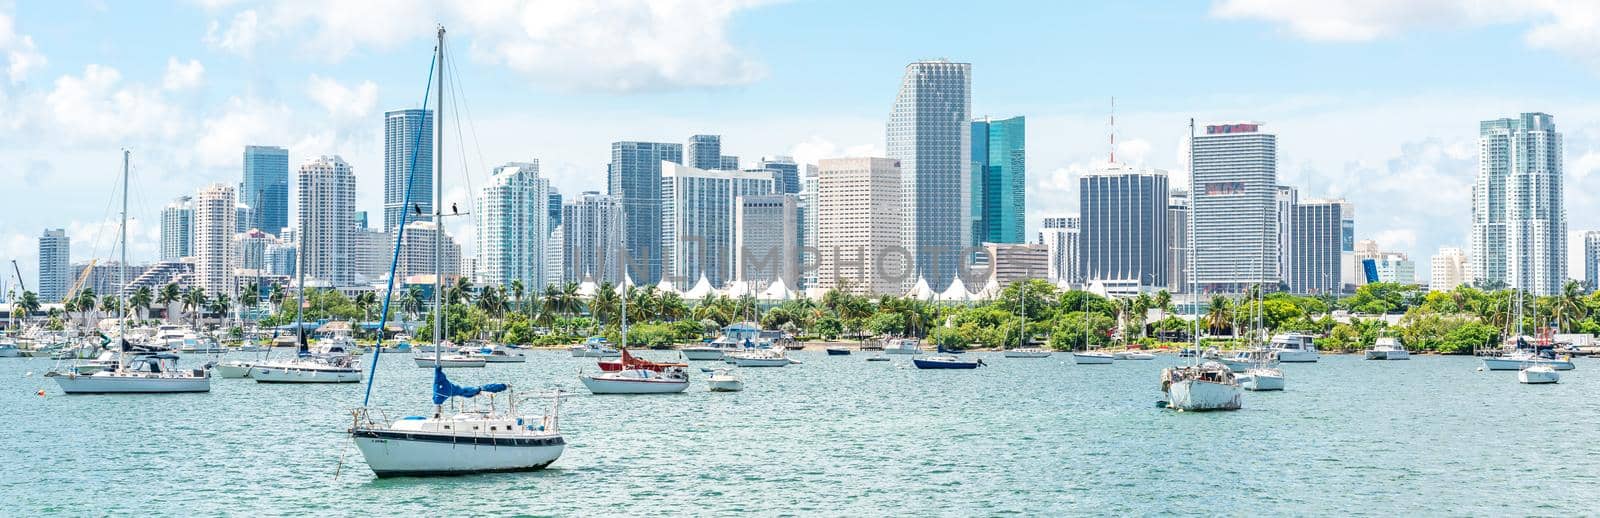 Miami, USA - September 11, 2019: Miami skyline with yachts, boats and skyscrapers by Mariakray